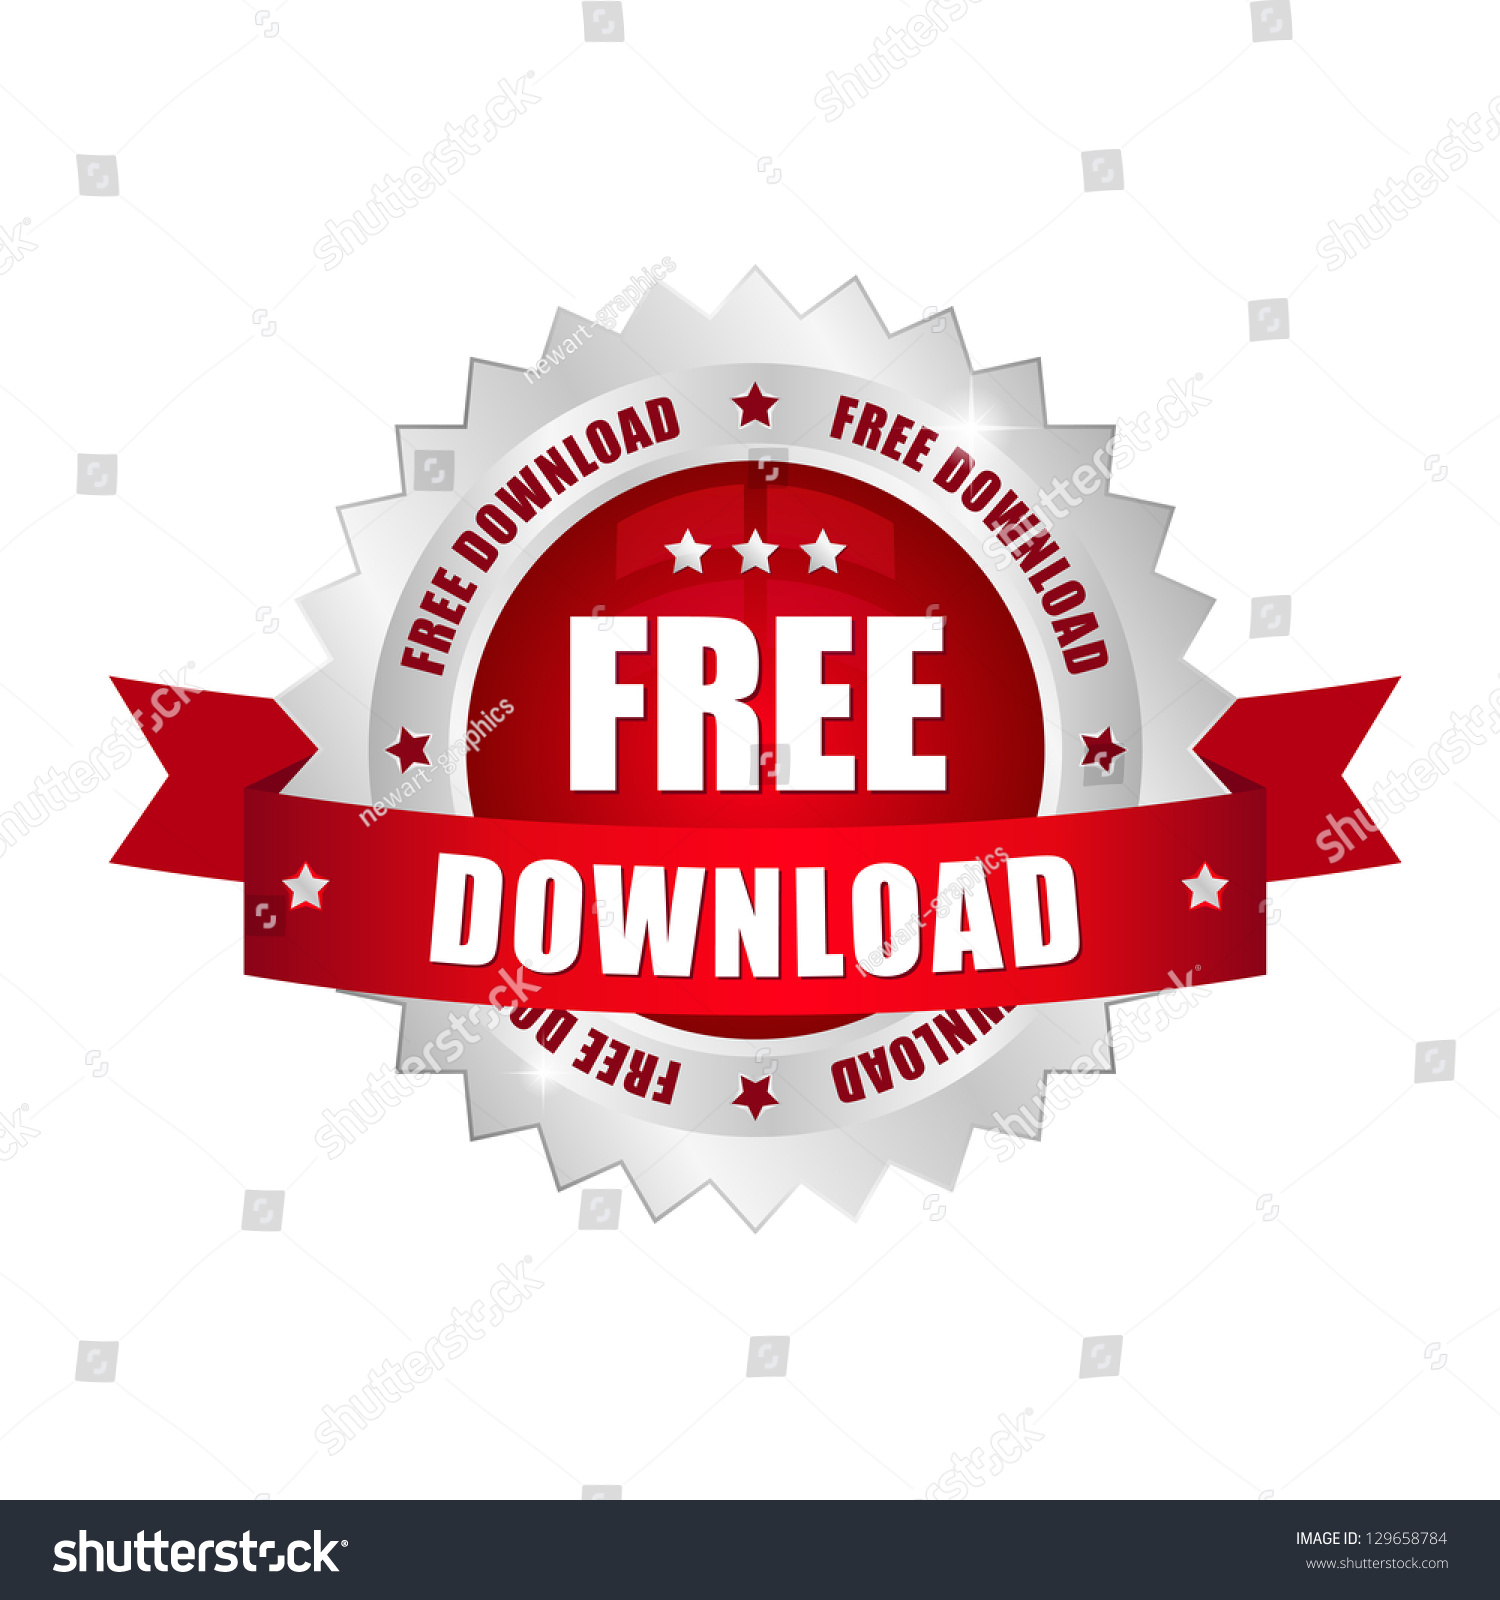 Shutterstock free download